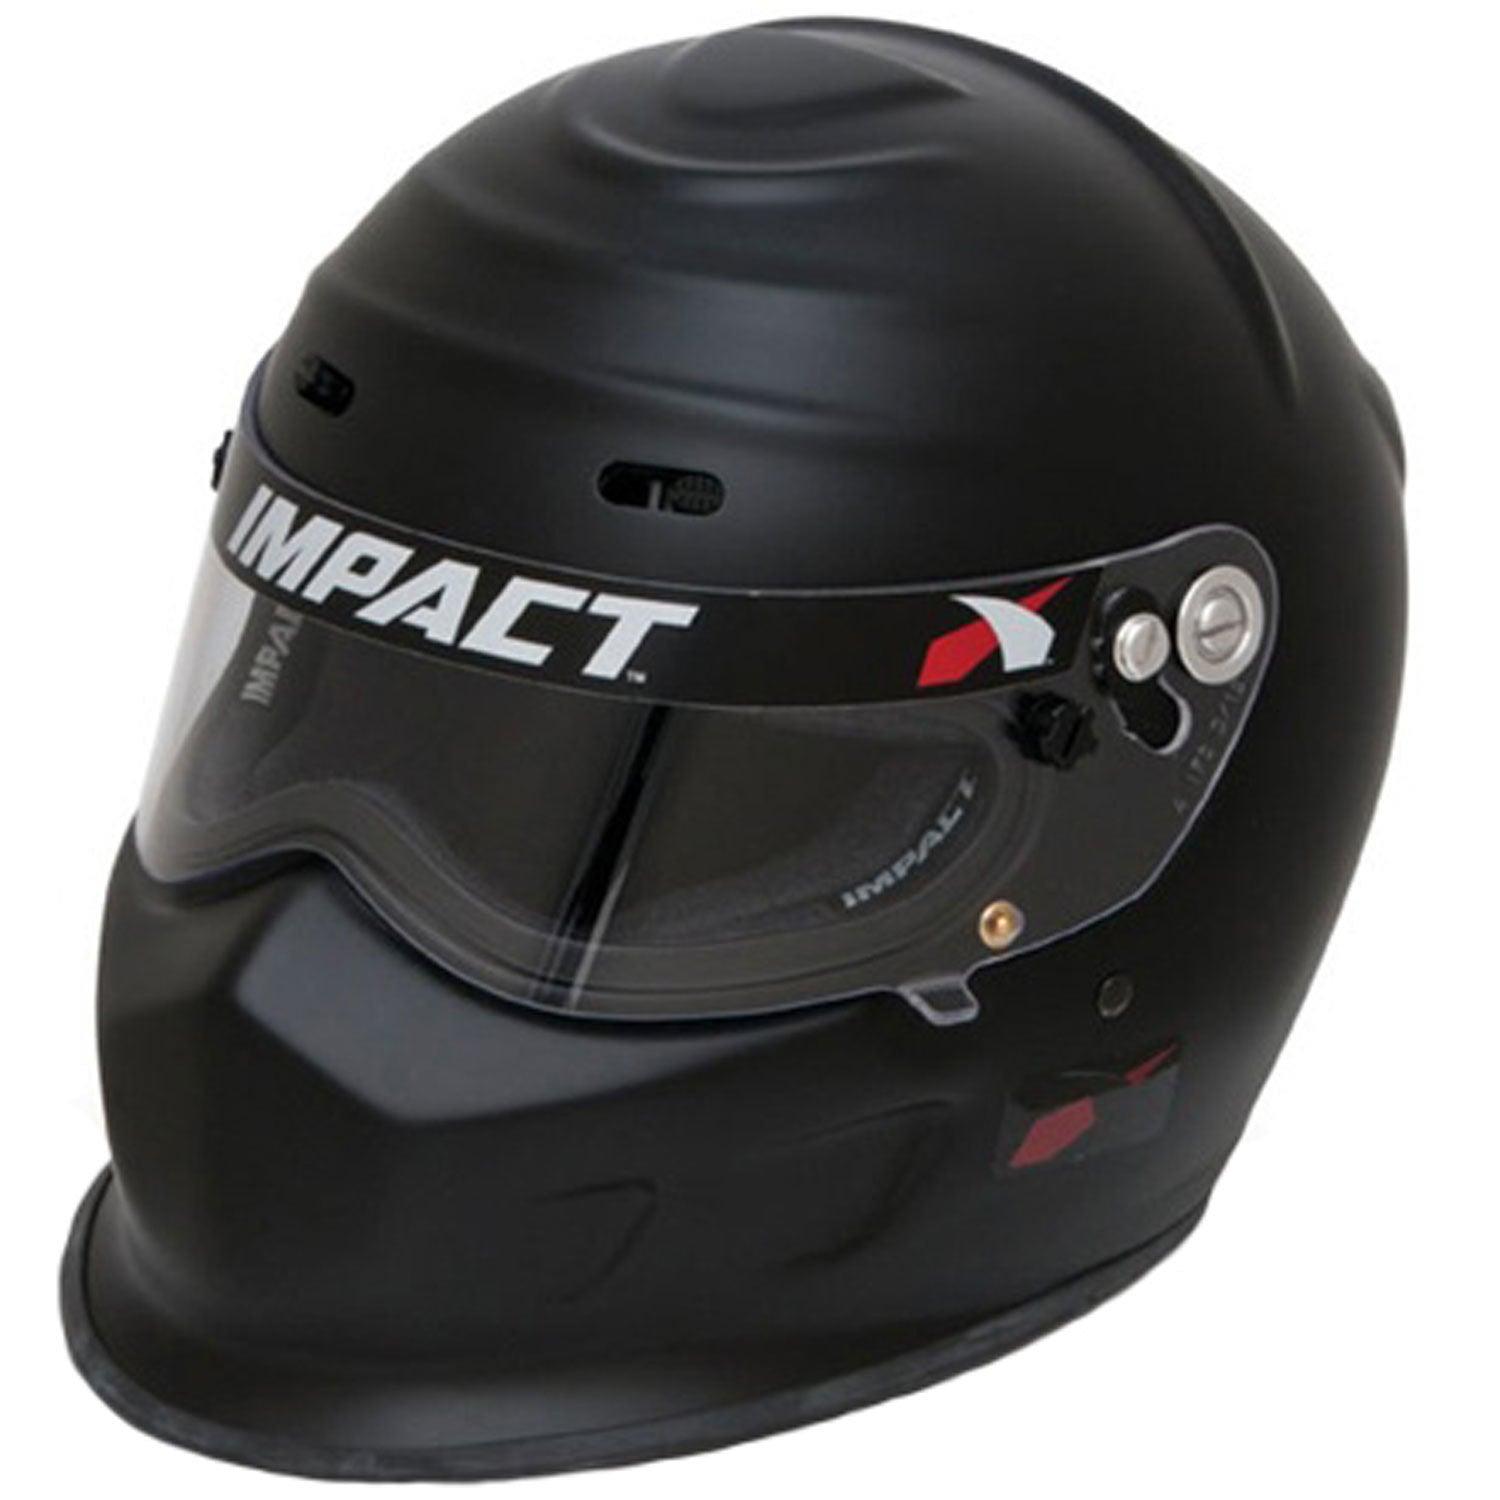 Helmet Champ Large Flat Black SA2020 - Burlile Performance Products